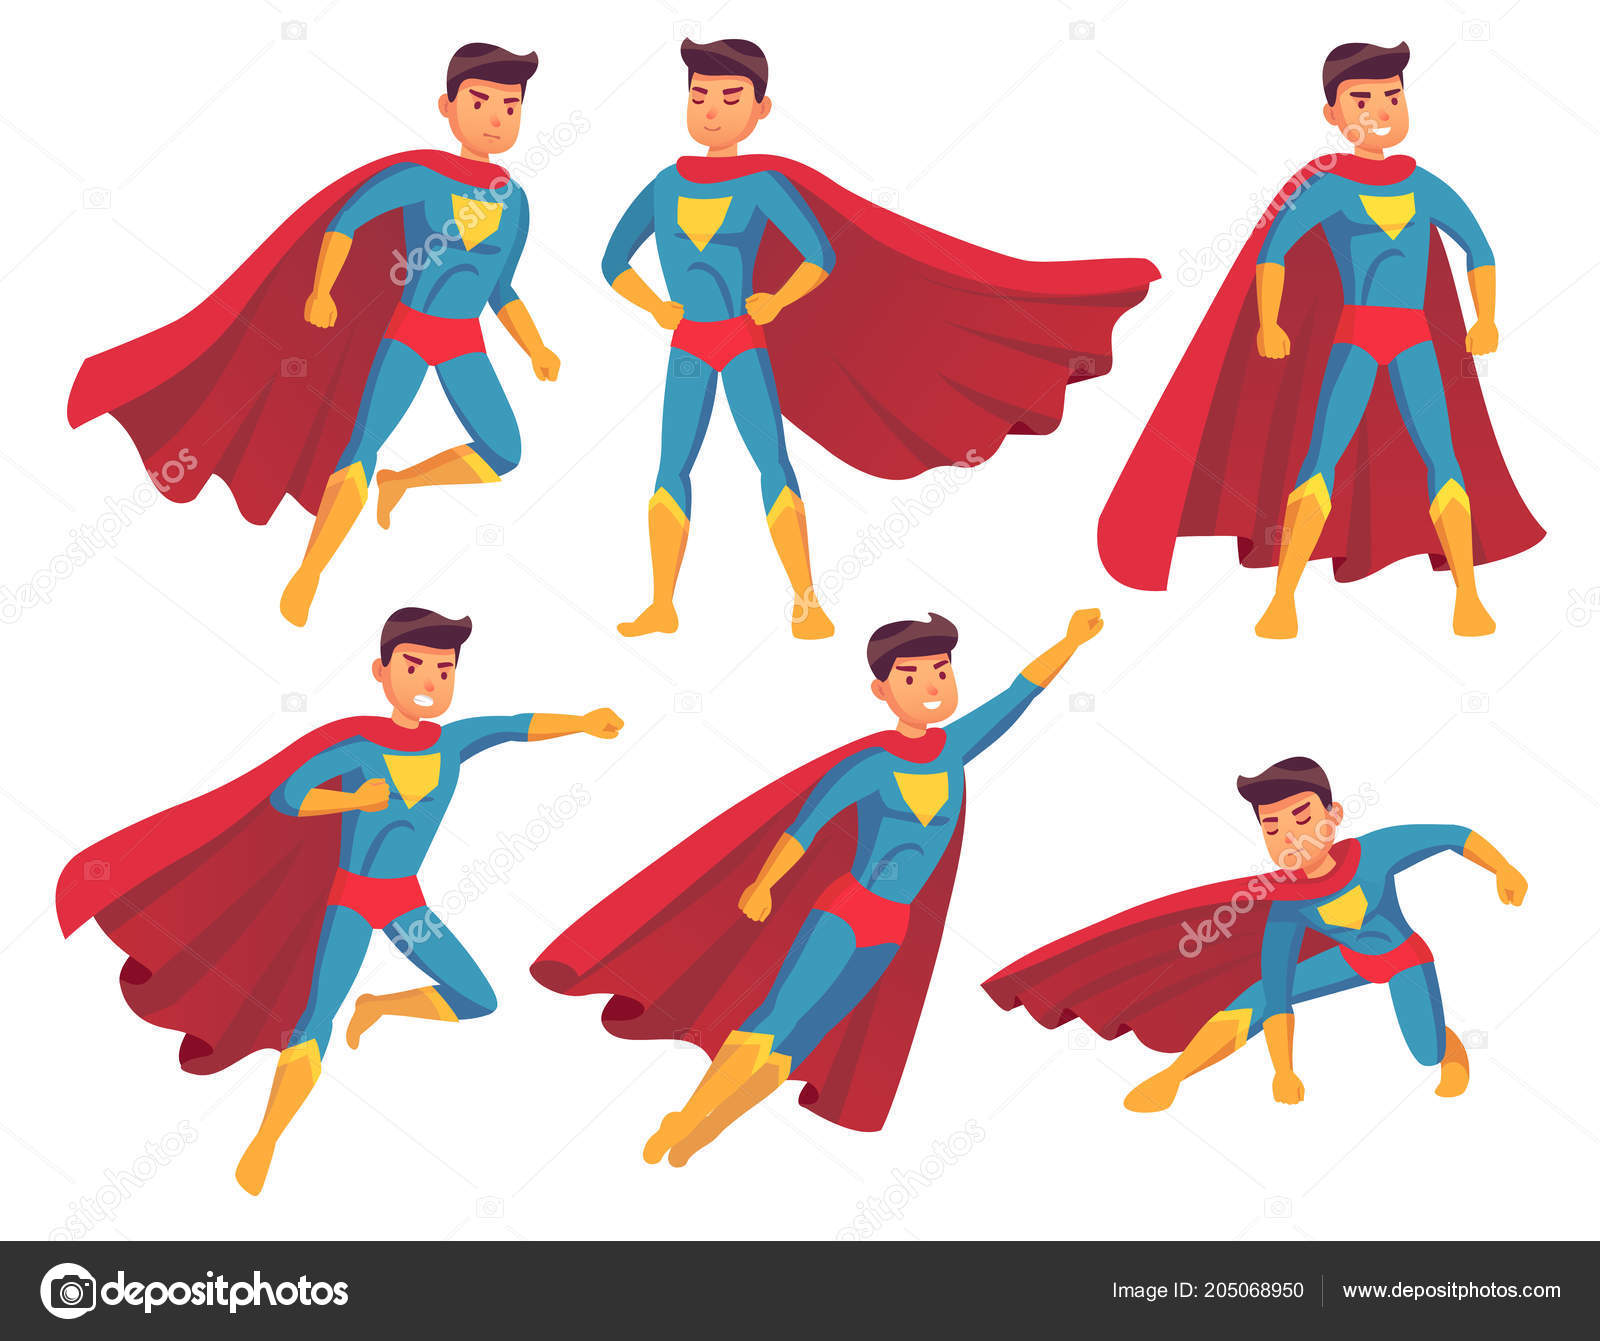 Superhero Pose Male Standing Angle by robertmarzullo on DeviantArt